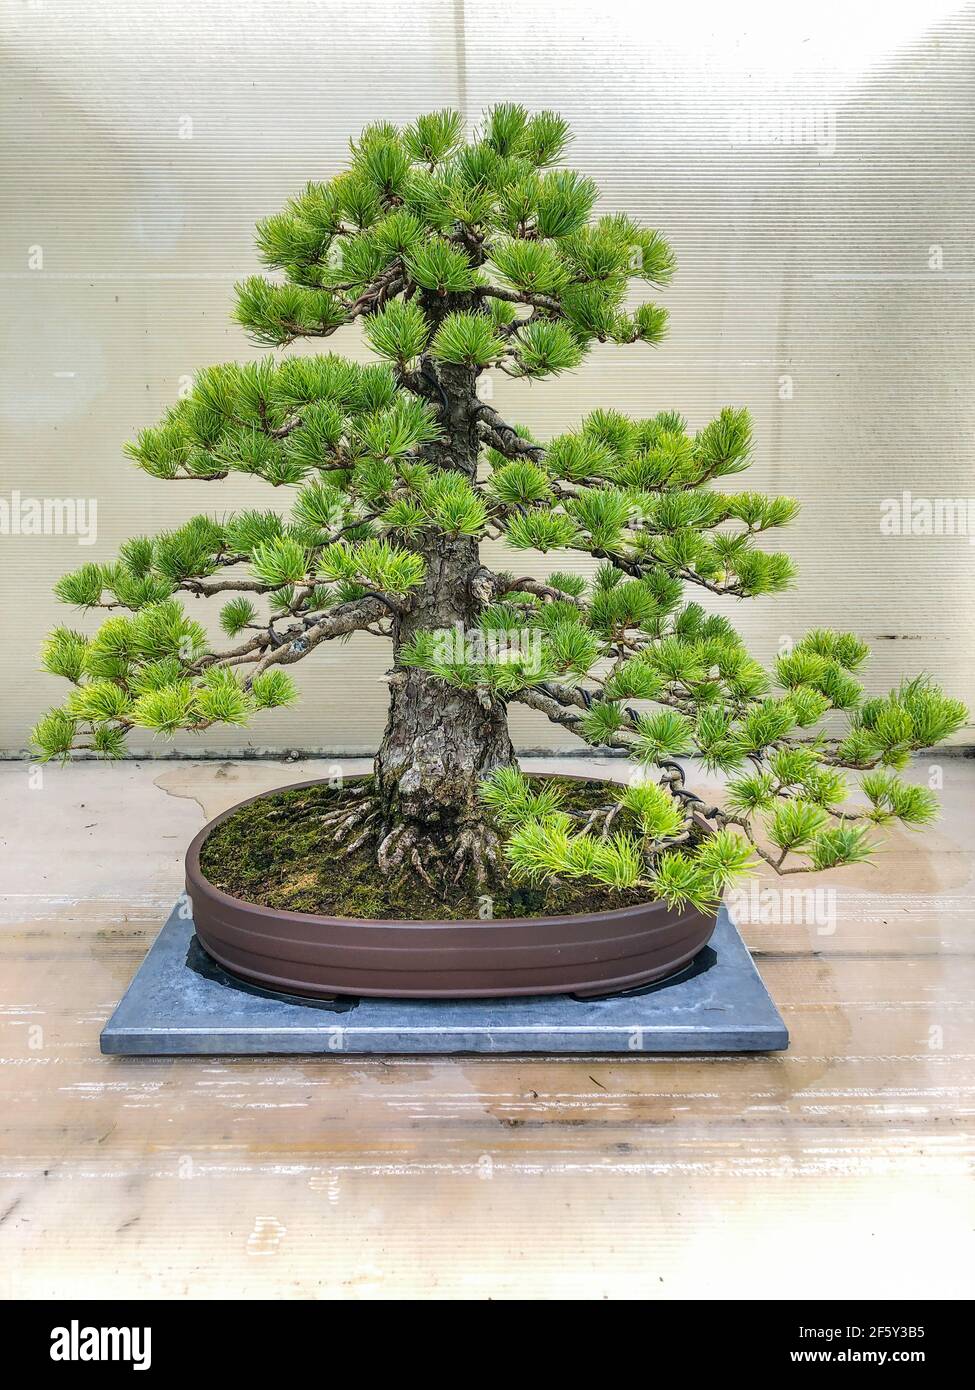 Banzai or Bonsai dwarf tree of Pinus parviflora Stock Photo - Alamy